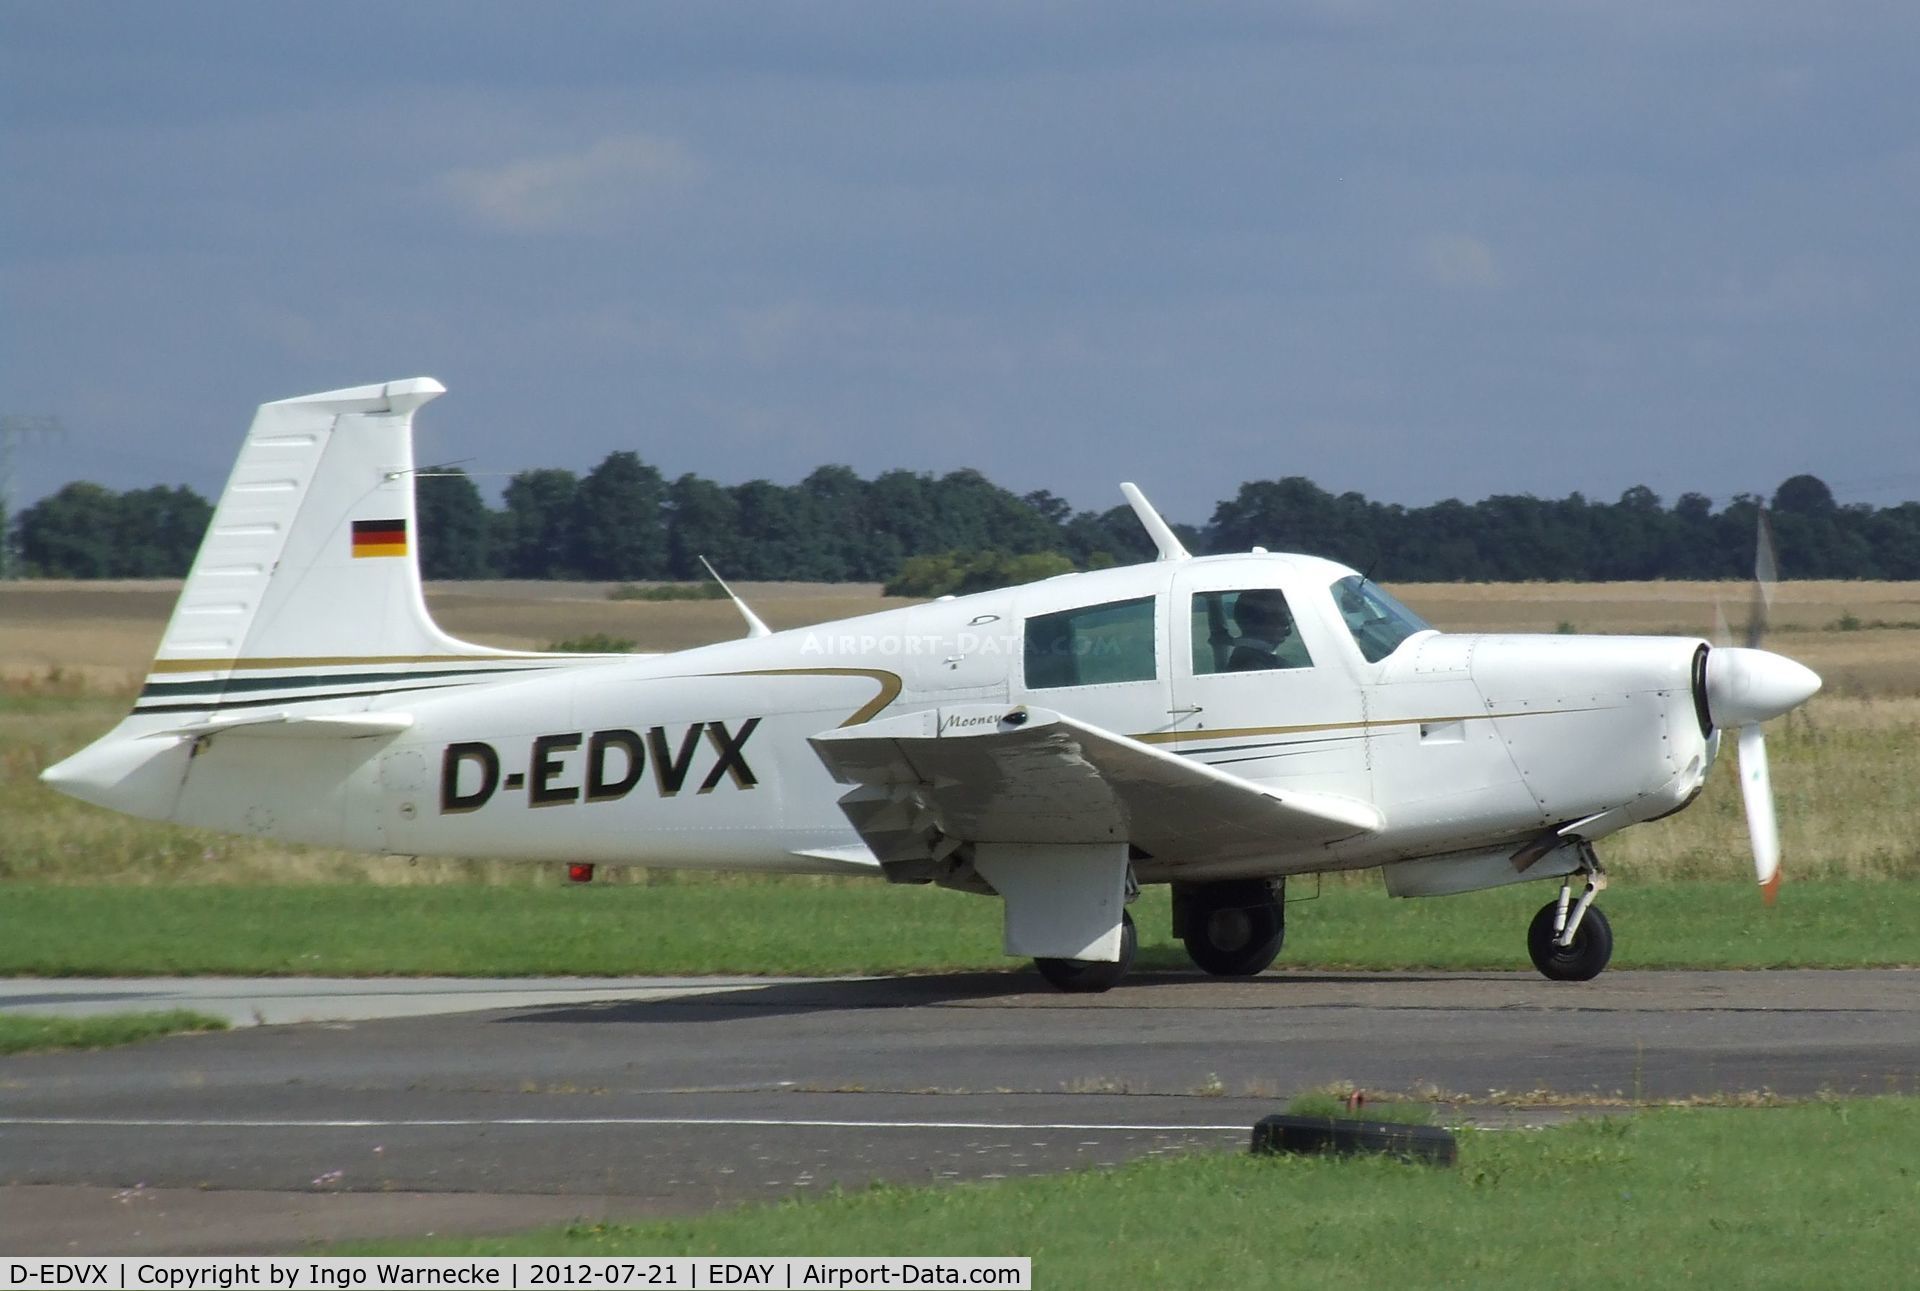 D-EDVX, 1971 Mooney M20E Chaparral C/N 21-0017, Mooney M20E Aerostar 201 Chaparral at Strausberg airfield